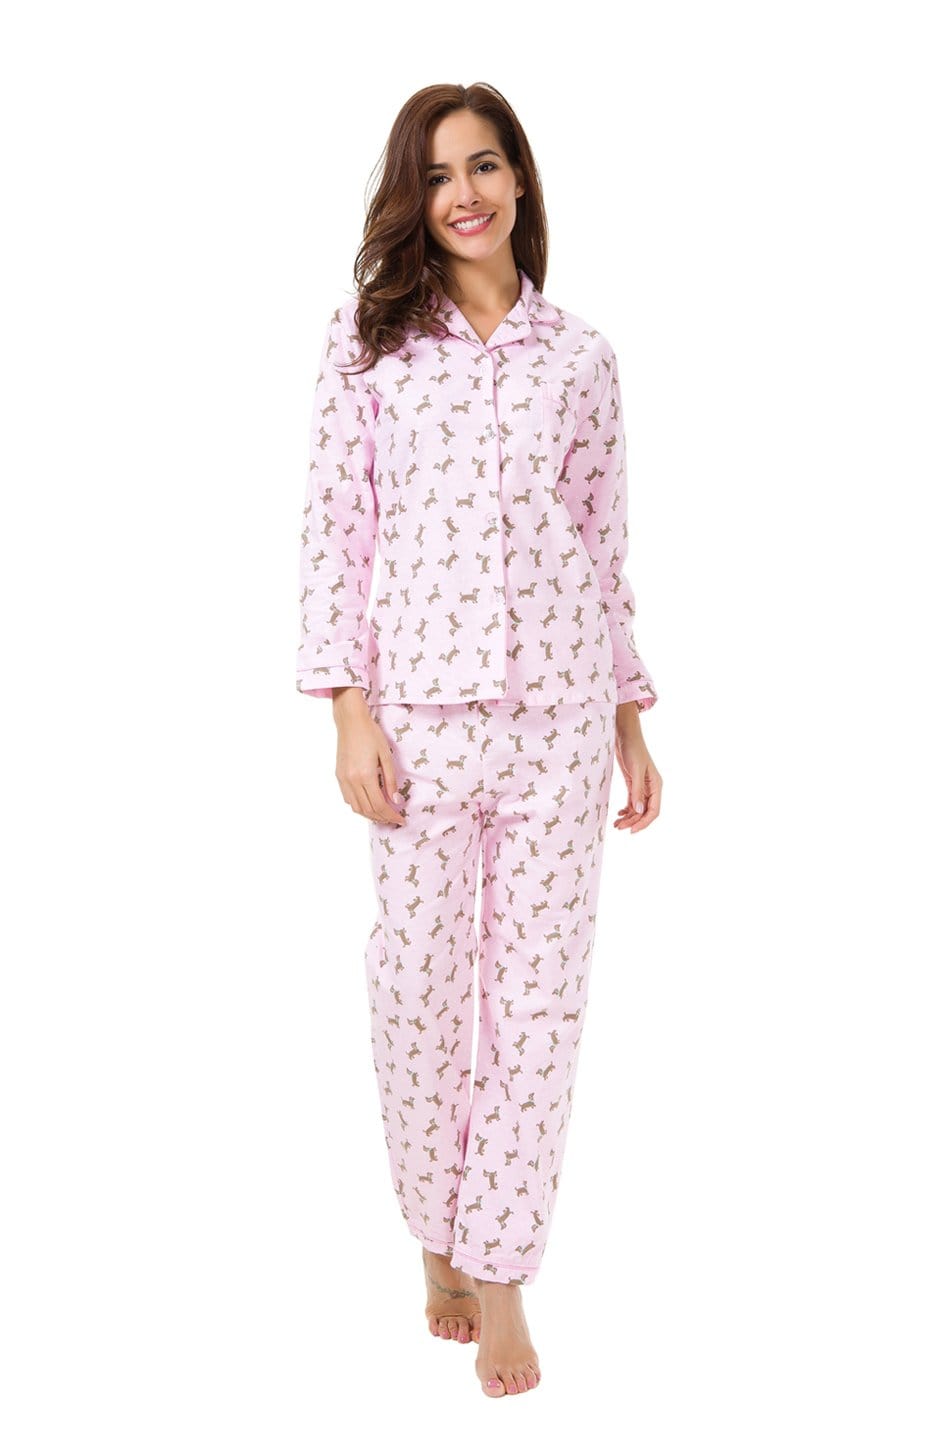 Pink Dachshund Pajamas The Doxie World